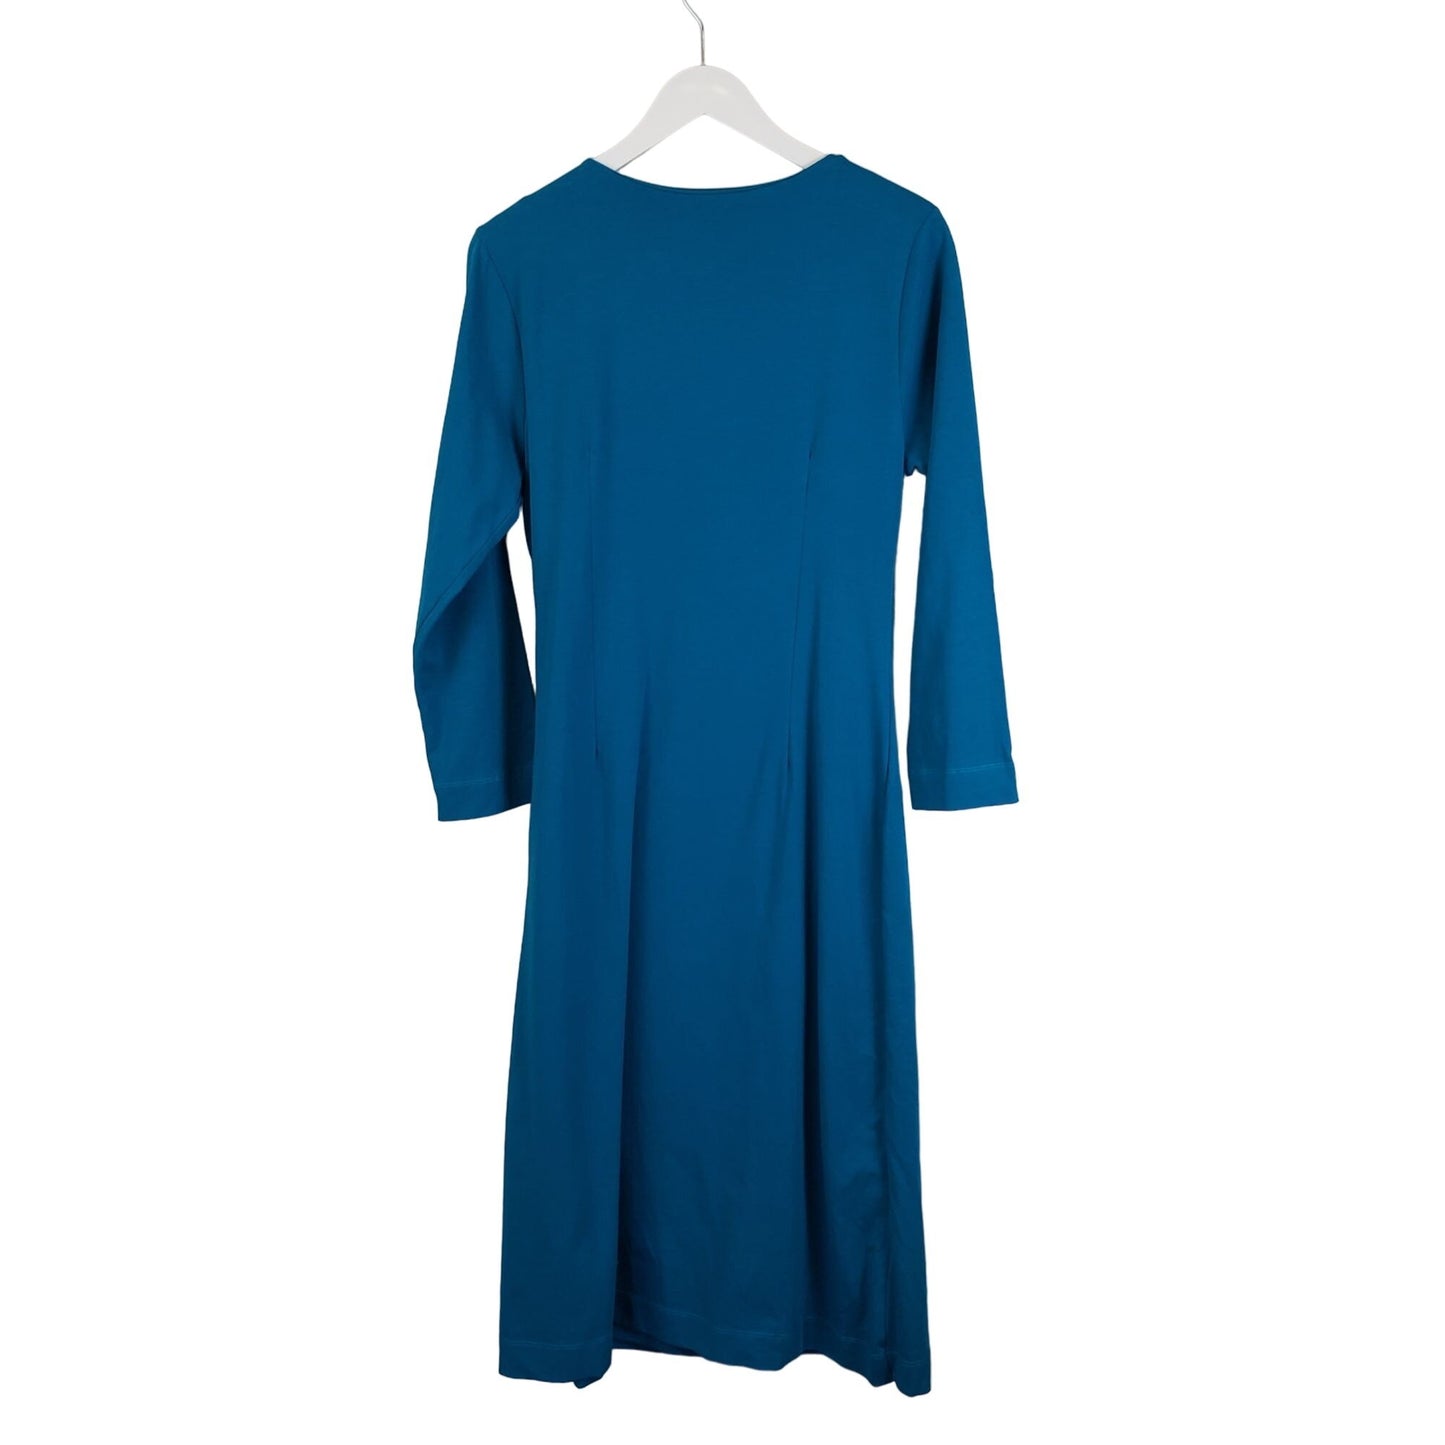 Soft Surroundings Wear Anywhere Lake Blue Faux Wrap Dress Size S Tall